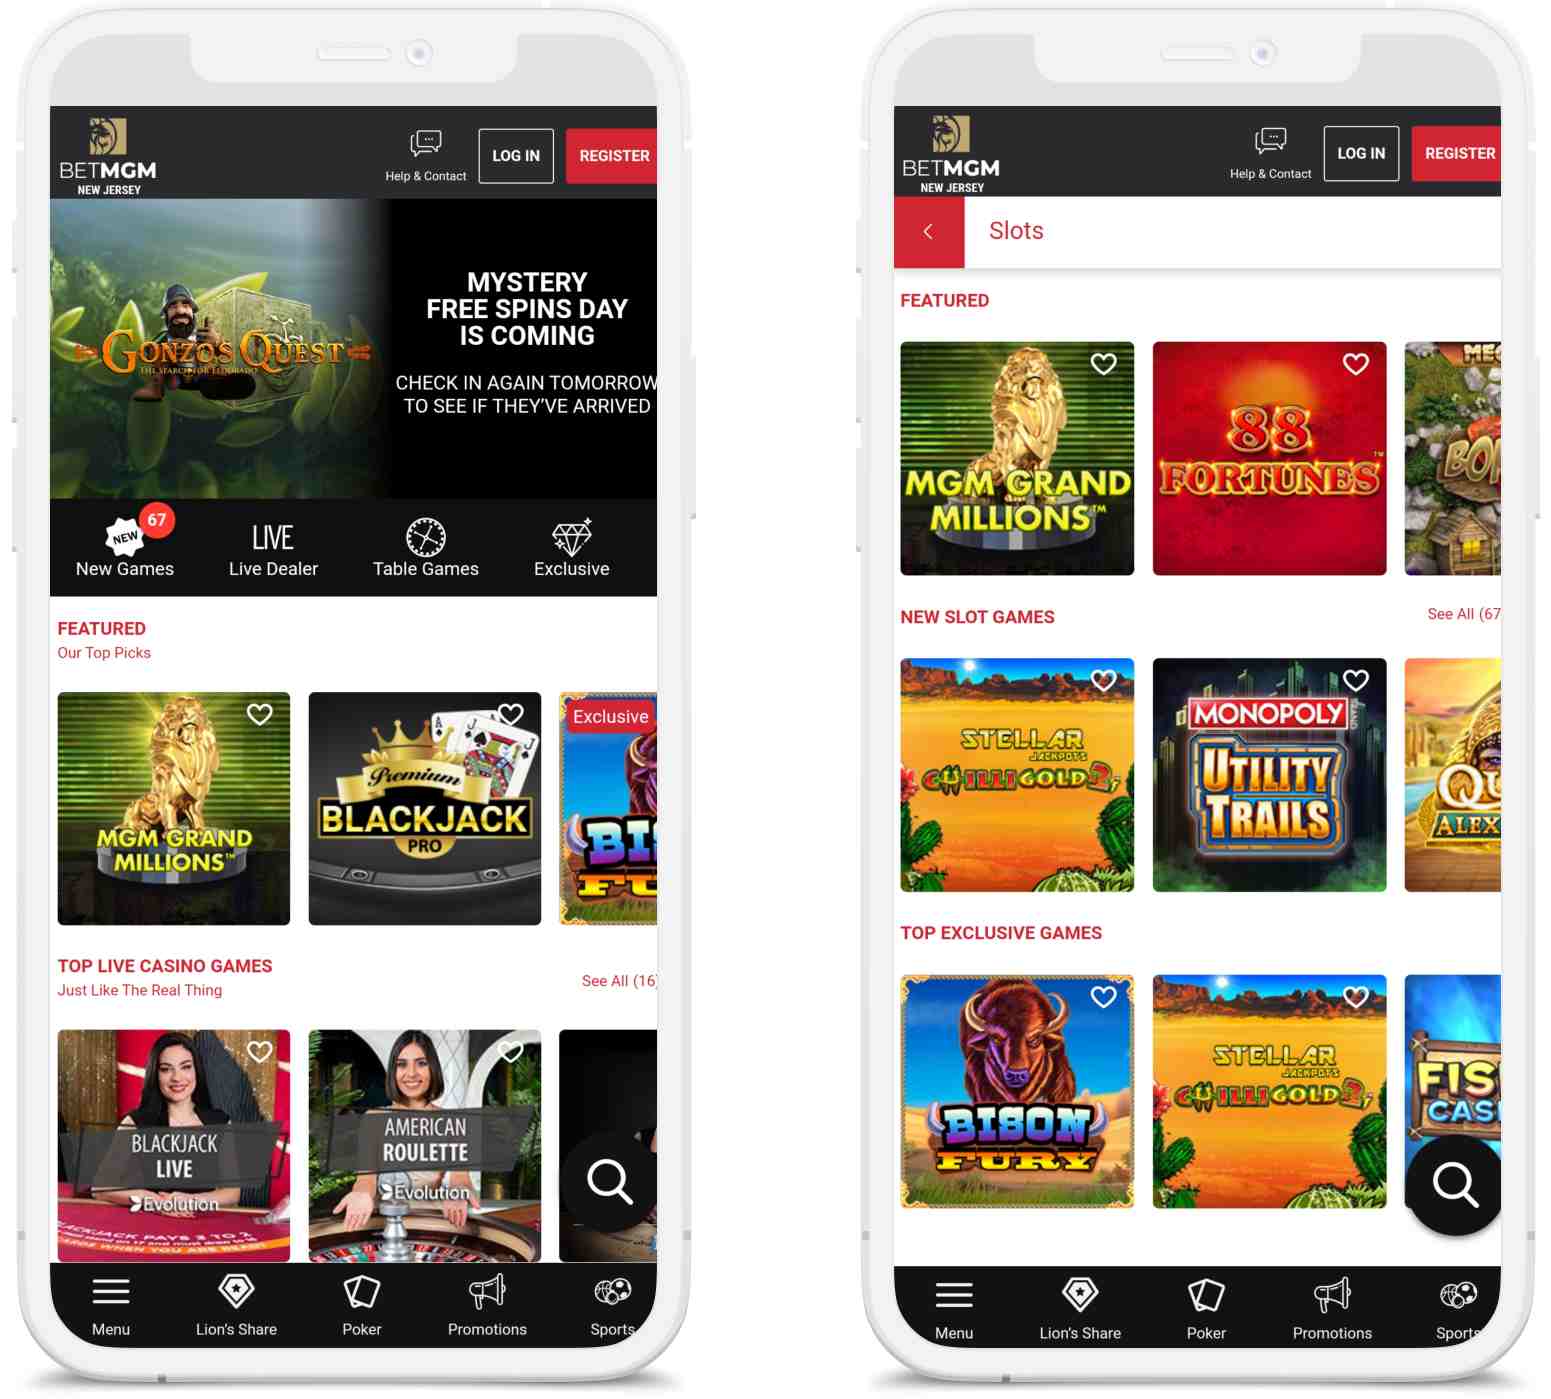 Betmgm Mobile Display - Homepage and Slot Games